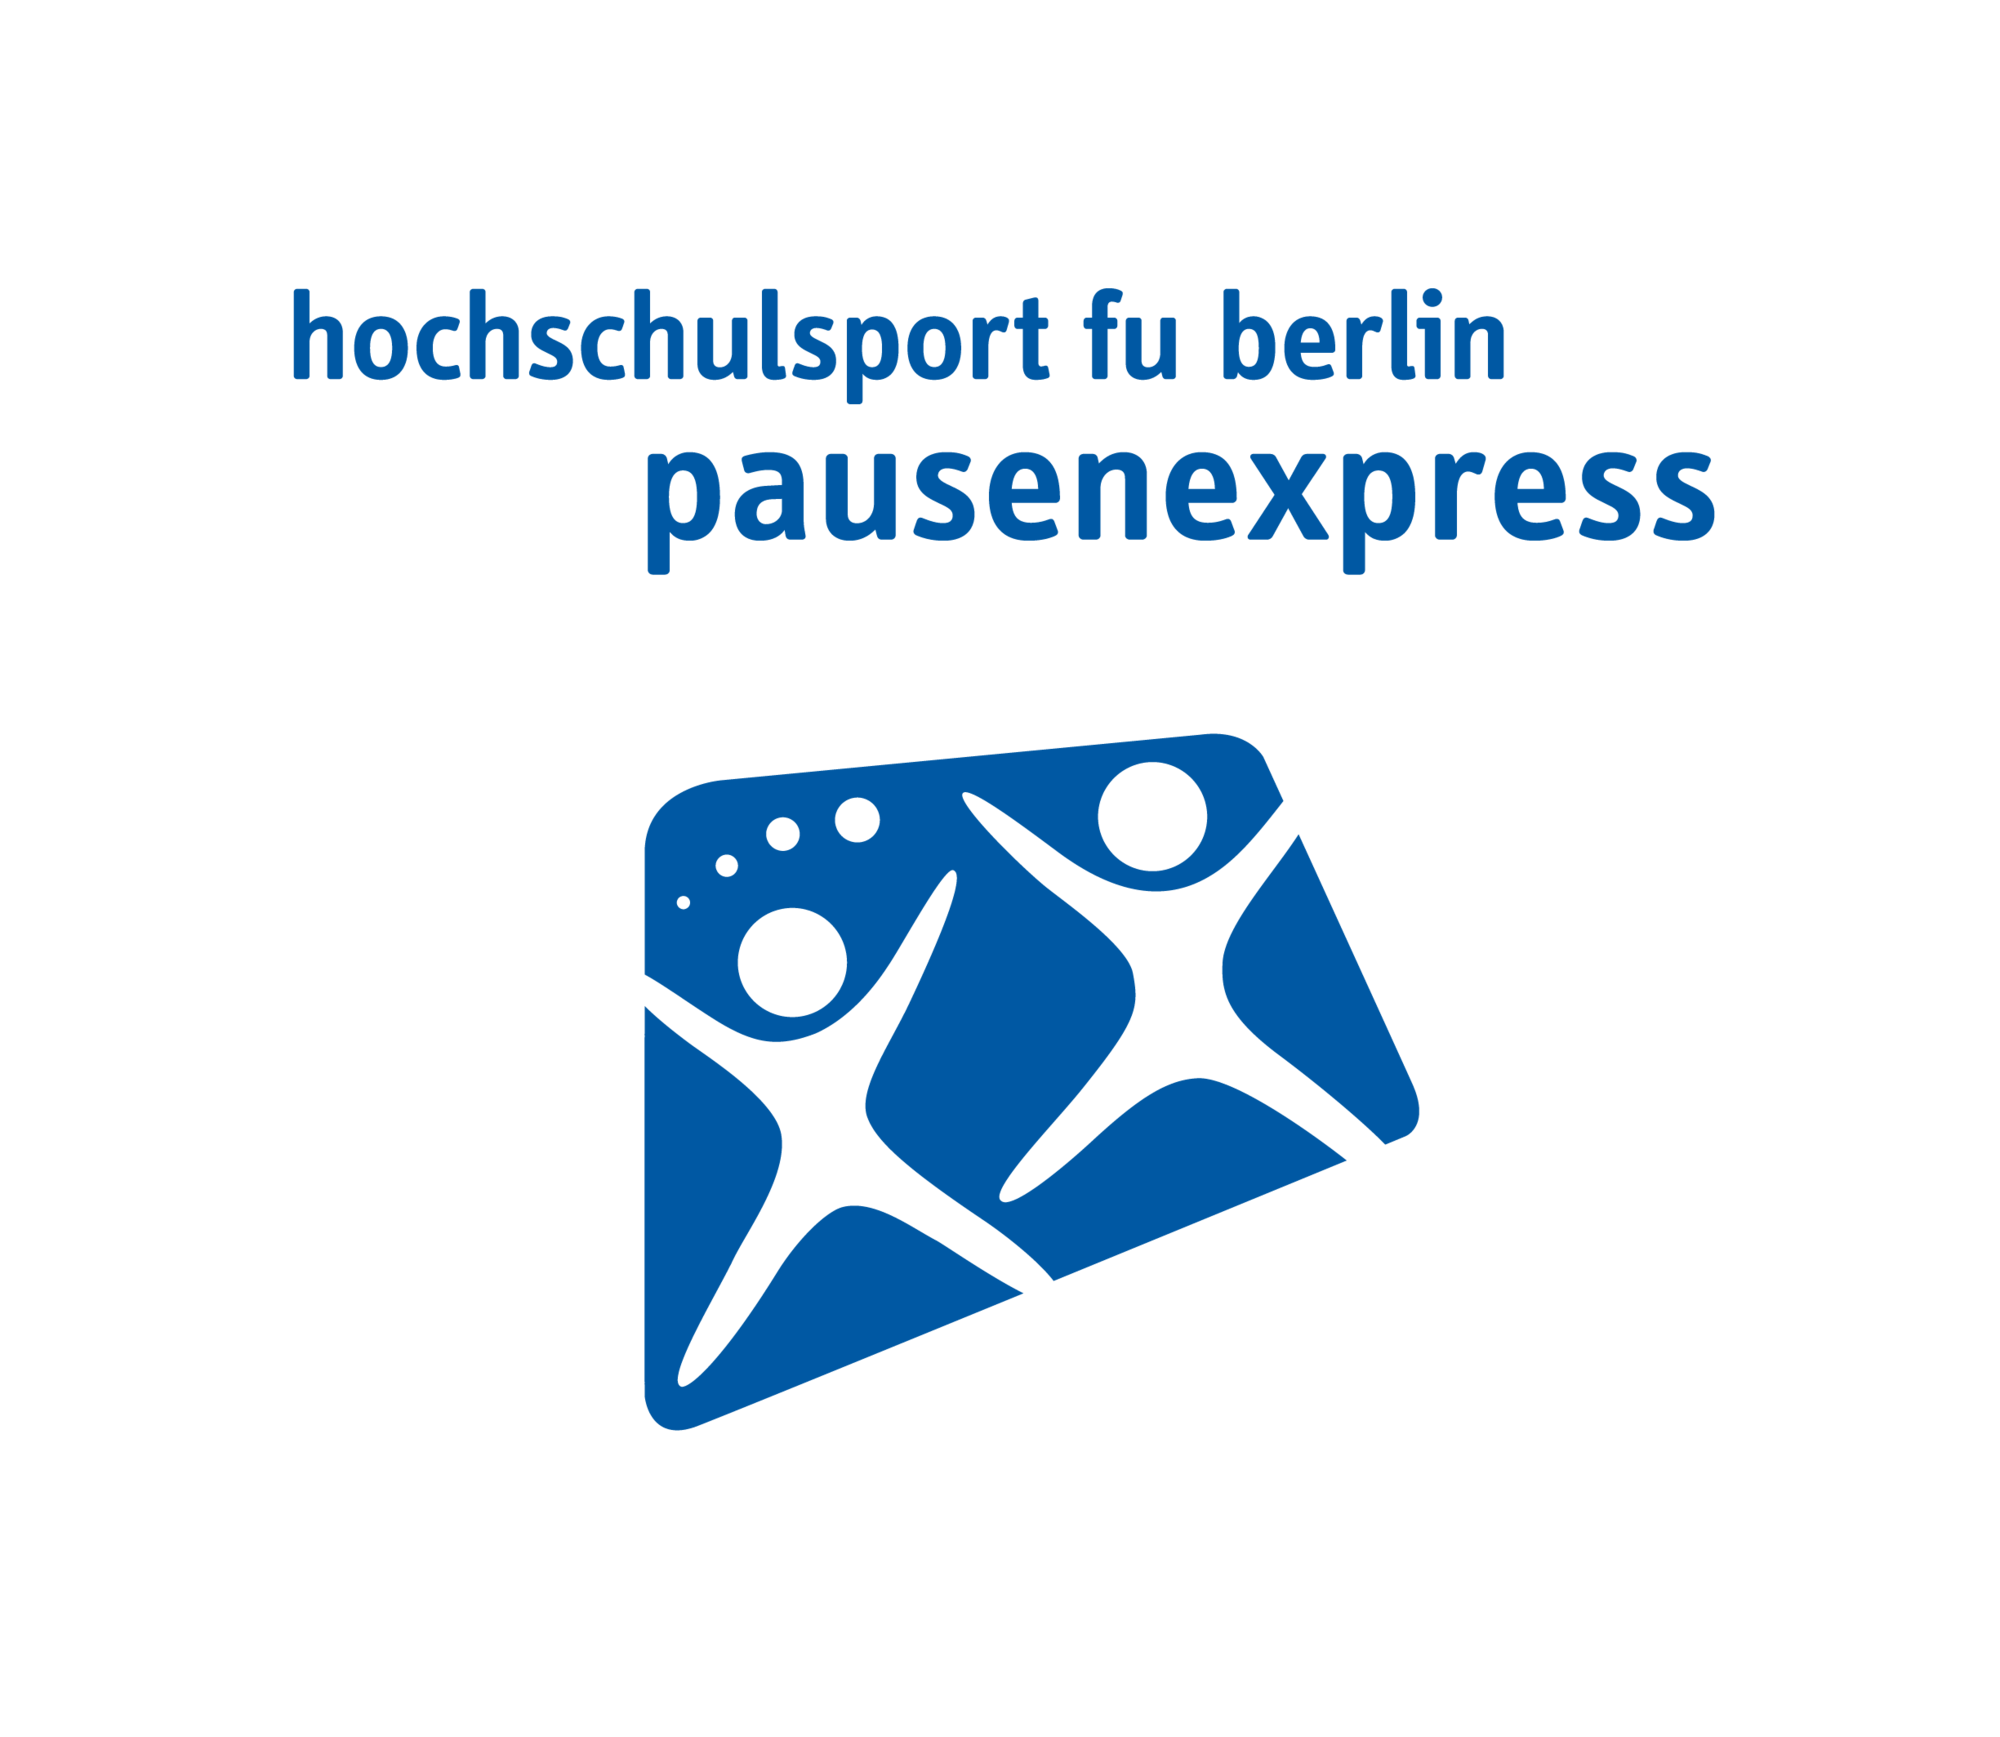 Pausenexpress Logo